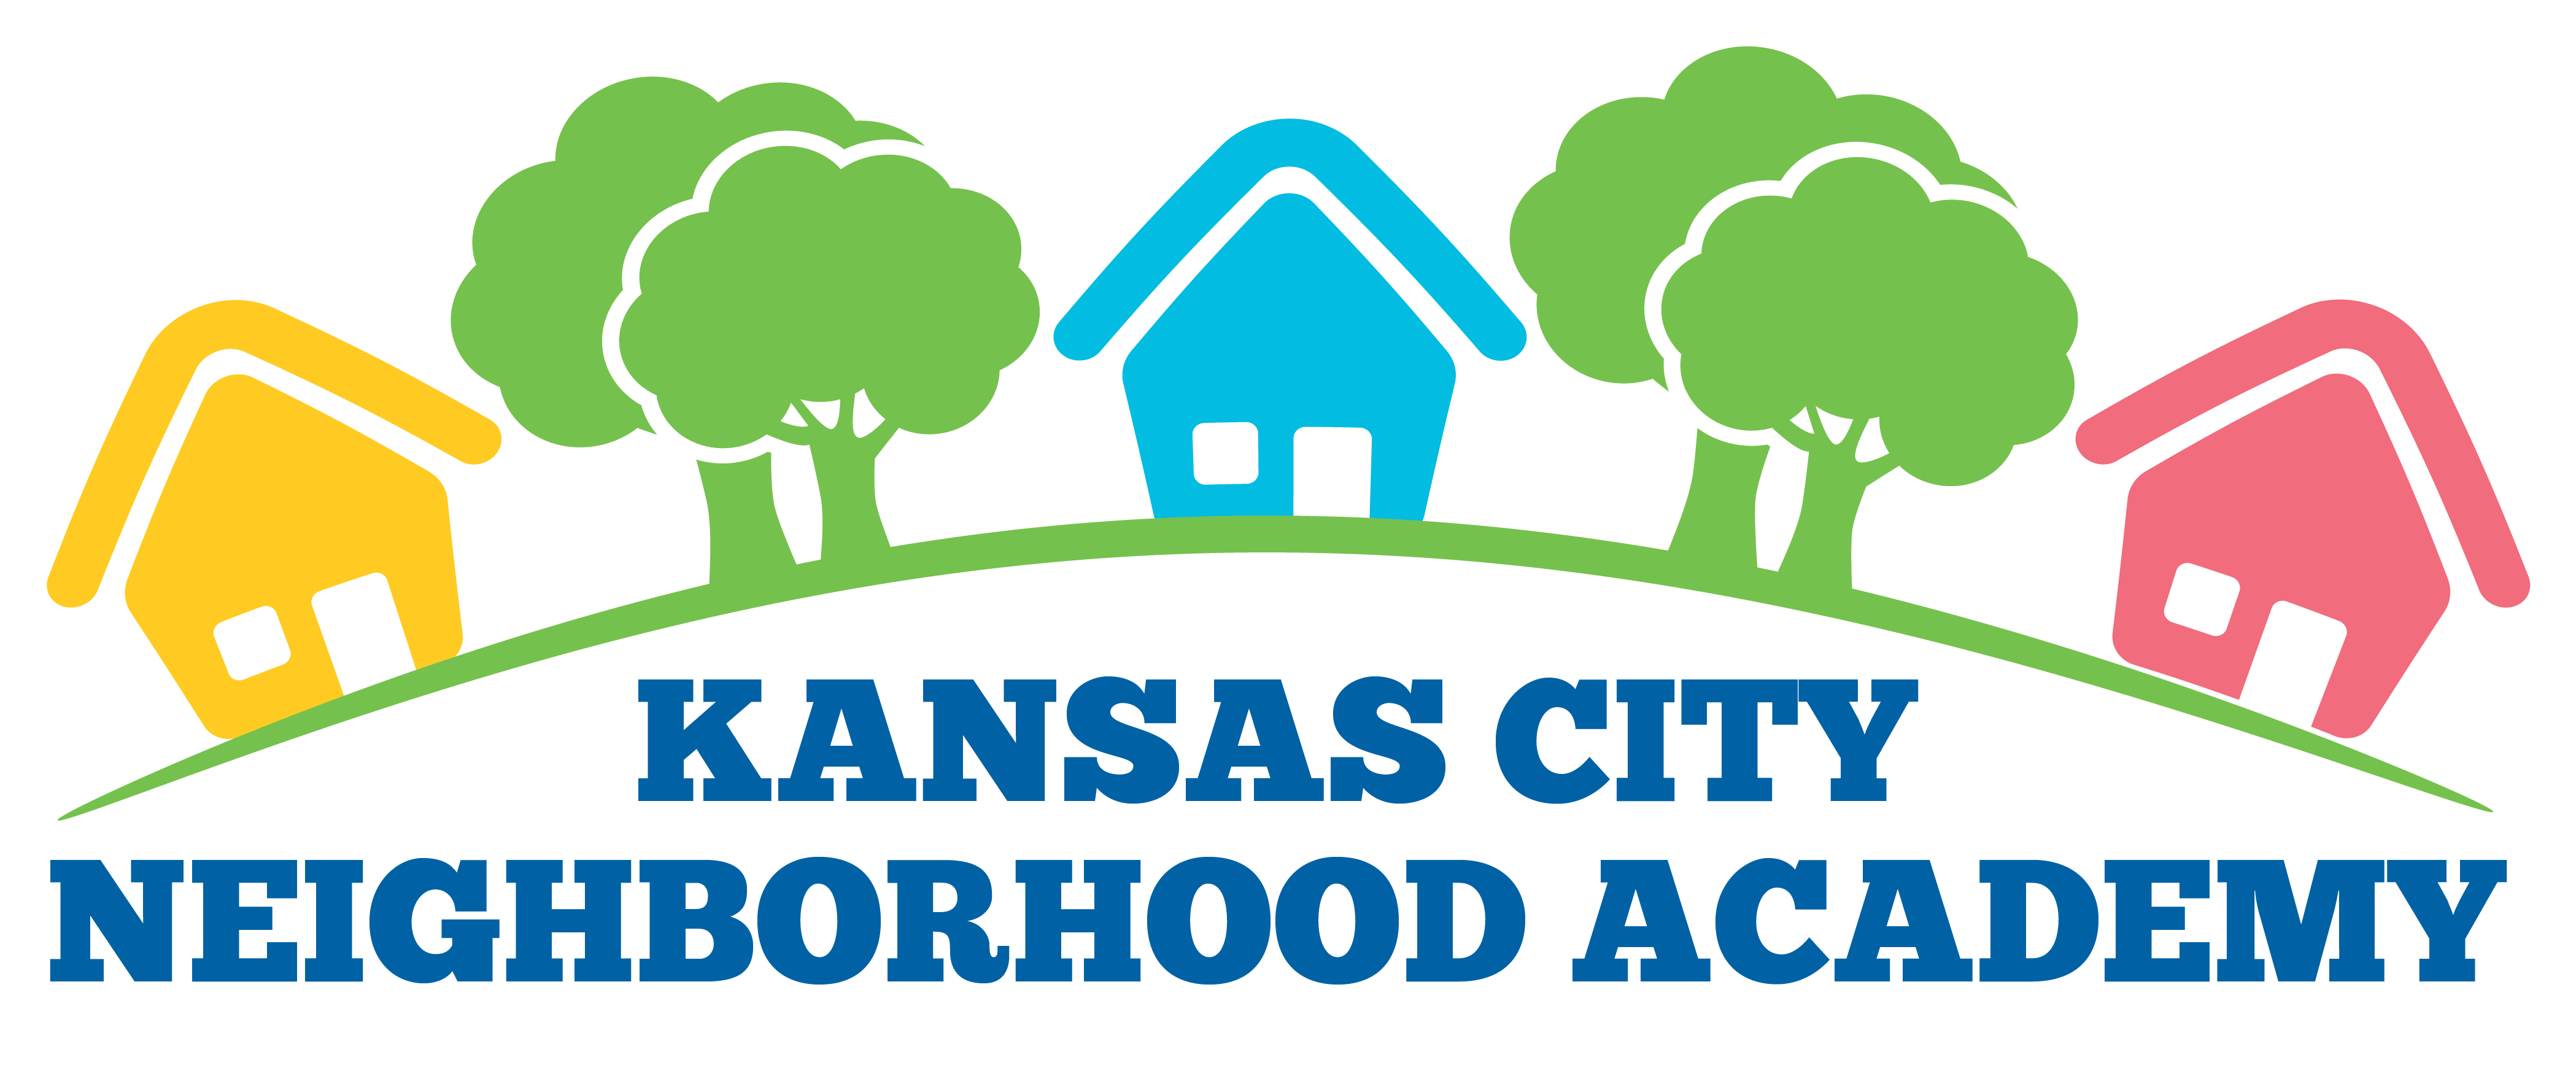 Community Meetings To Help Shape Kansas City Neighborhood Academy - City Neighborhood, Transparent background PNG HD thumbnail